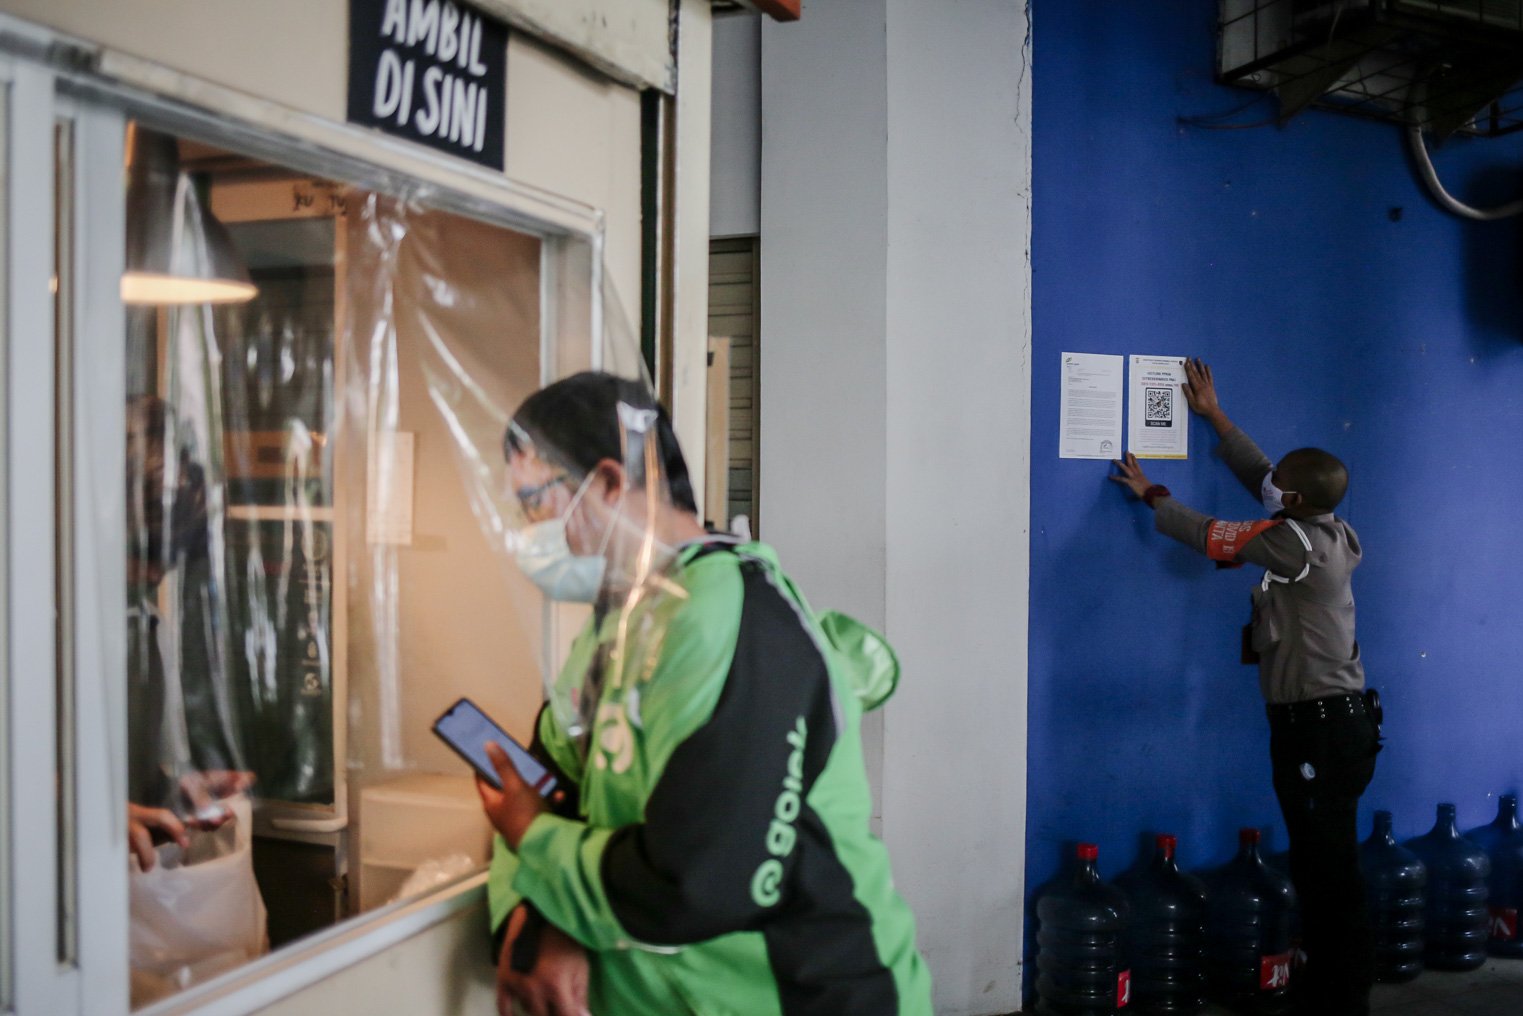 Petugas memasang stiker pengaduan pelanggaran PPKM terpasang di Pasar Santa, Jakarta, Kamis (2/9). Berbagai upaya dilakukan pedagang Pasar Santa untuk menarik pelanggan pada masa PPKM level 3 dengan menasang stiker sertifikat vaksin Covid-19 di beberapa ruko, menyediakan fasilitas disinfektan sebelum masuk pasar, serta mengimbau pedagang dan pengunjung untuk menerapkan protokol kesehatan yang ketat.